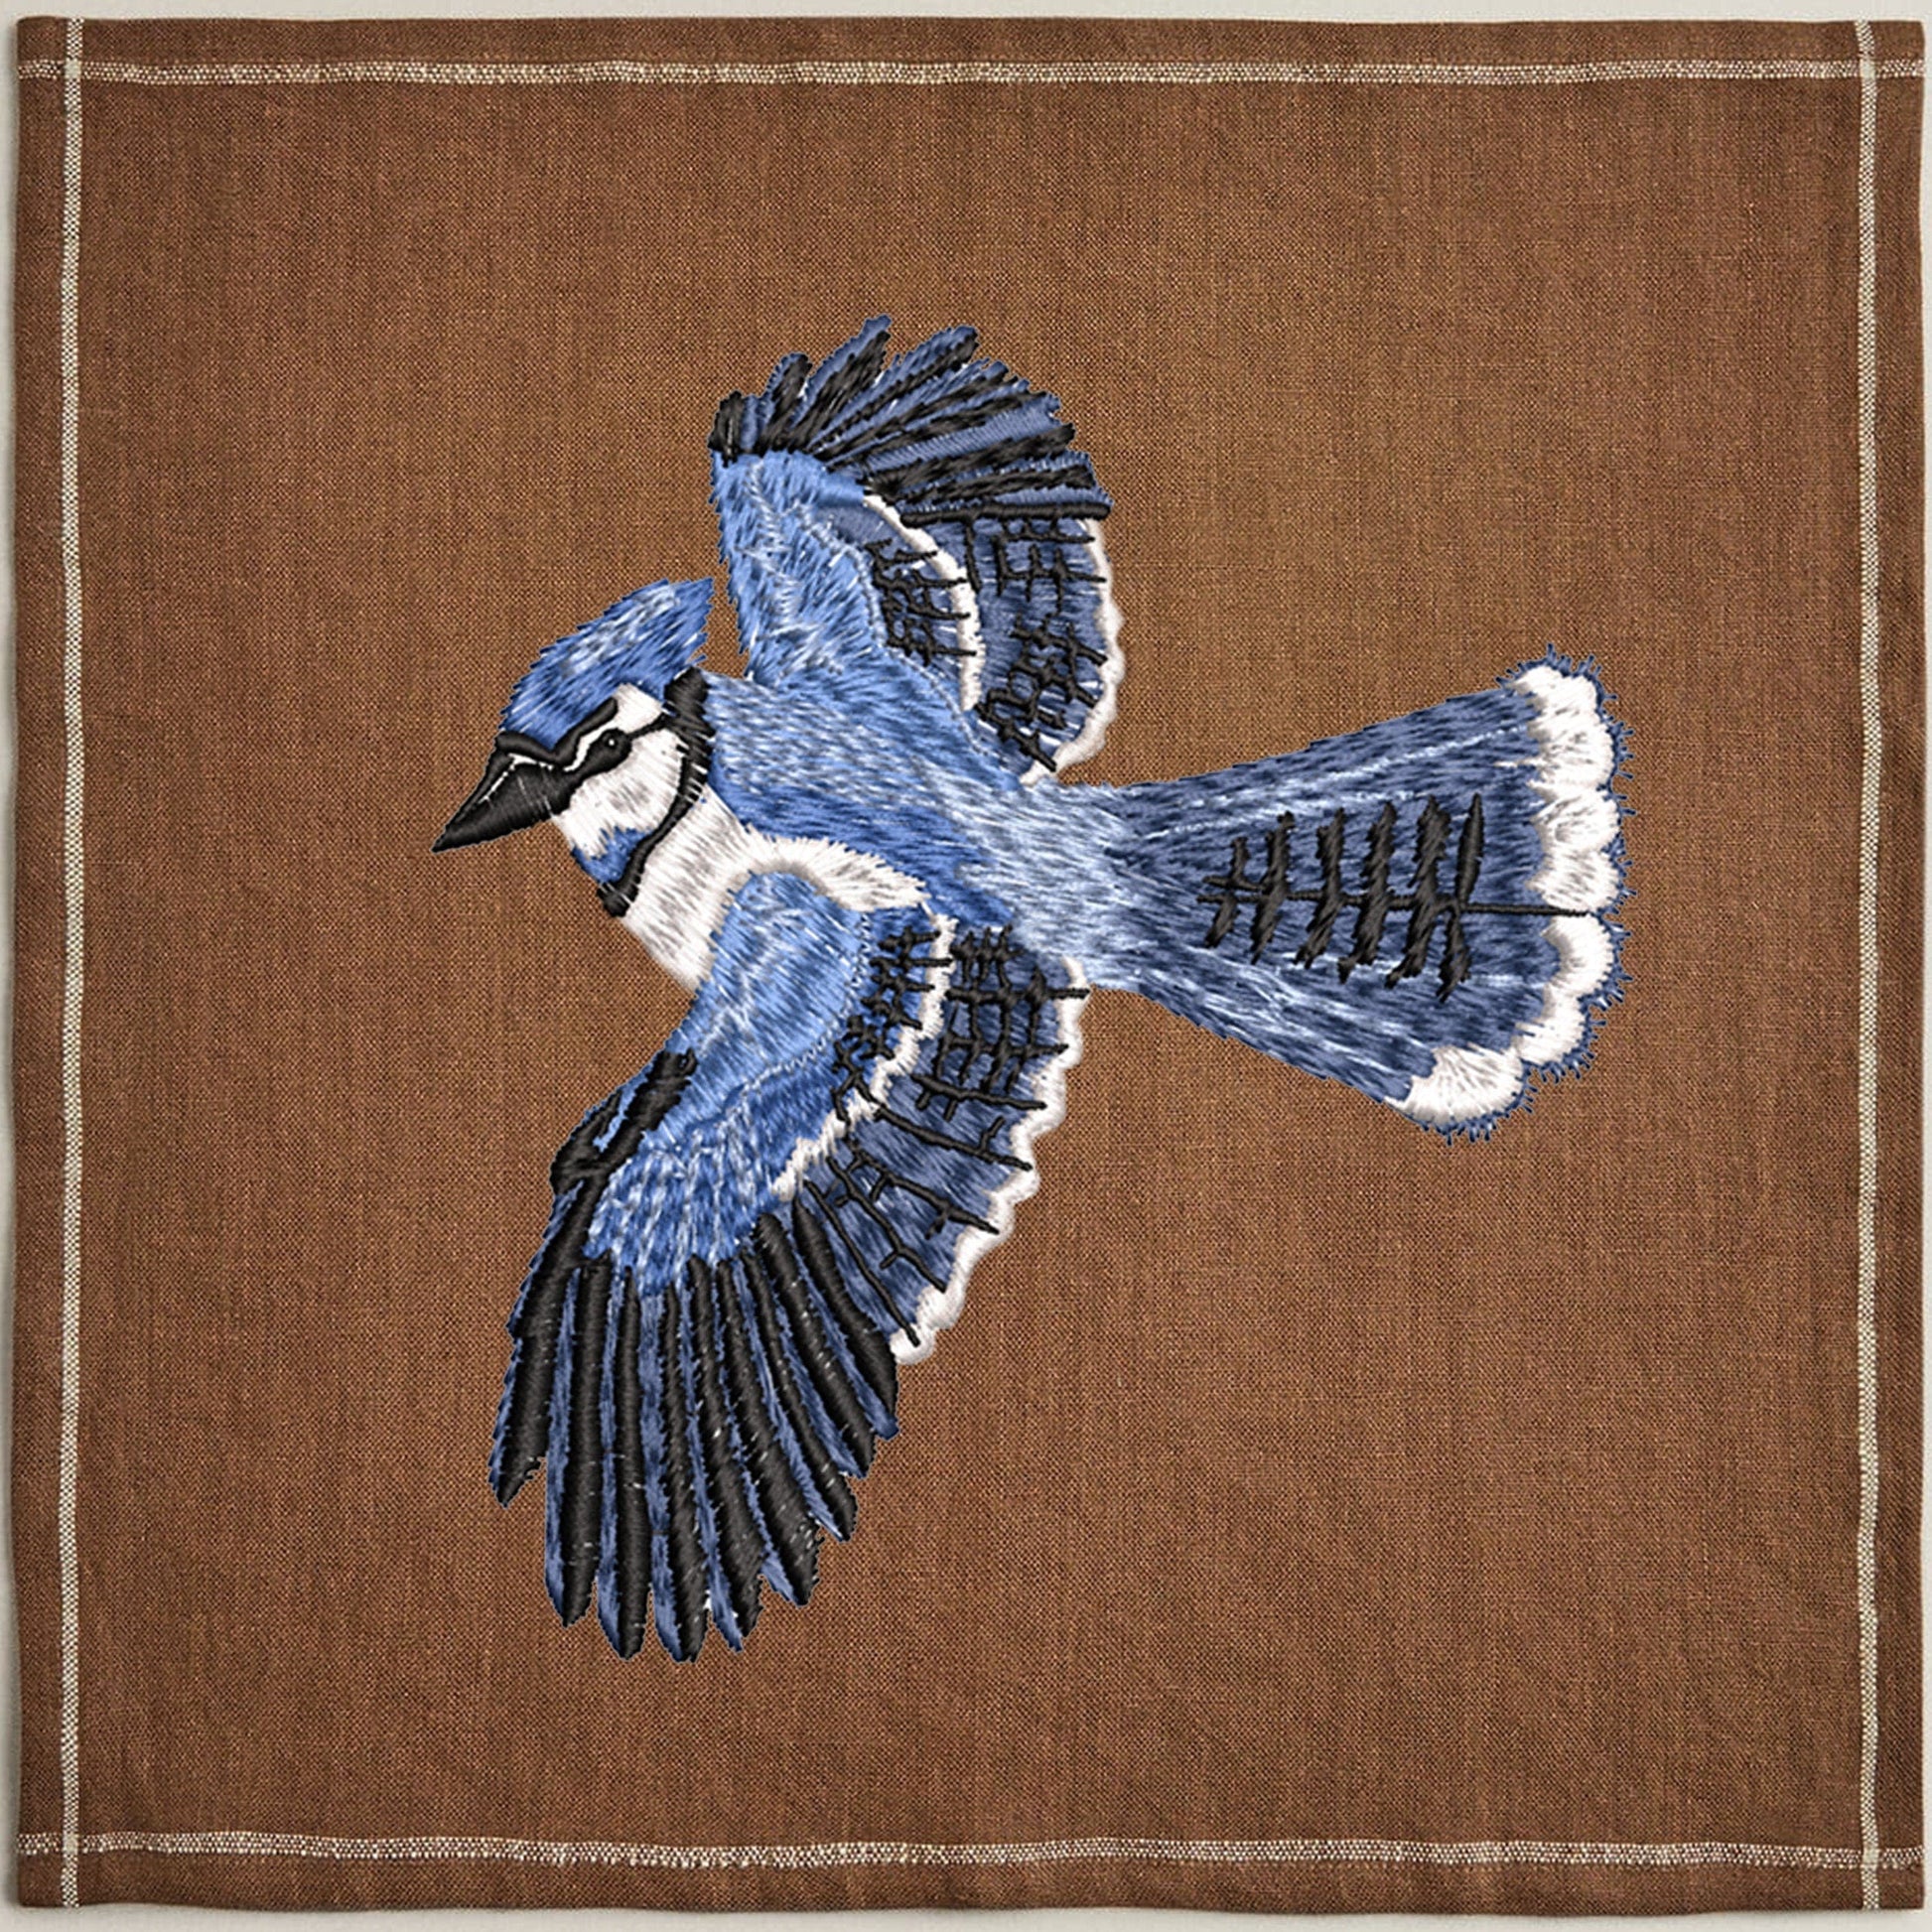 Beautiful Bluebird machine embroidery design on napkin